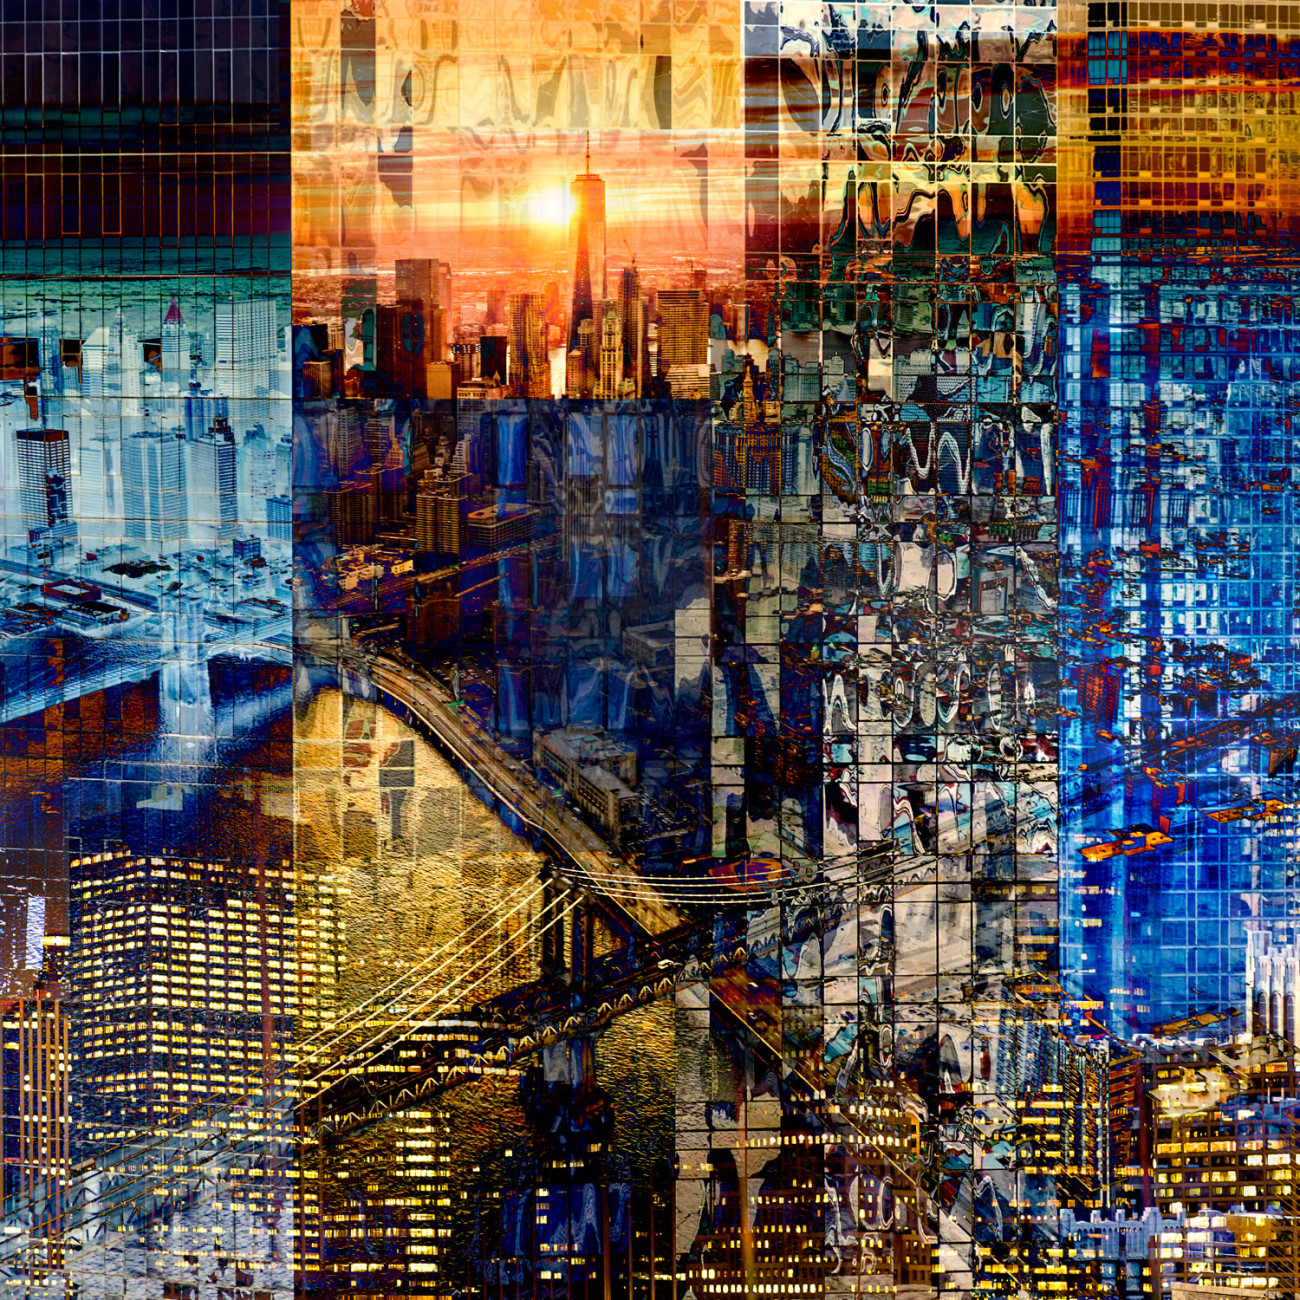 Metropolis - Through the looking glass, 2015